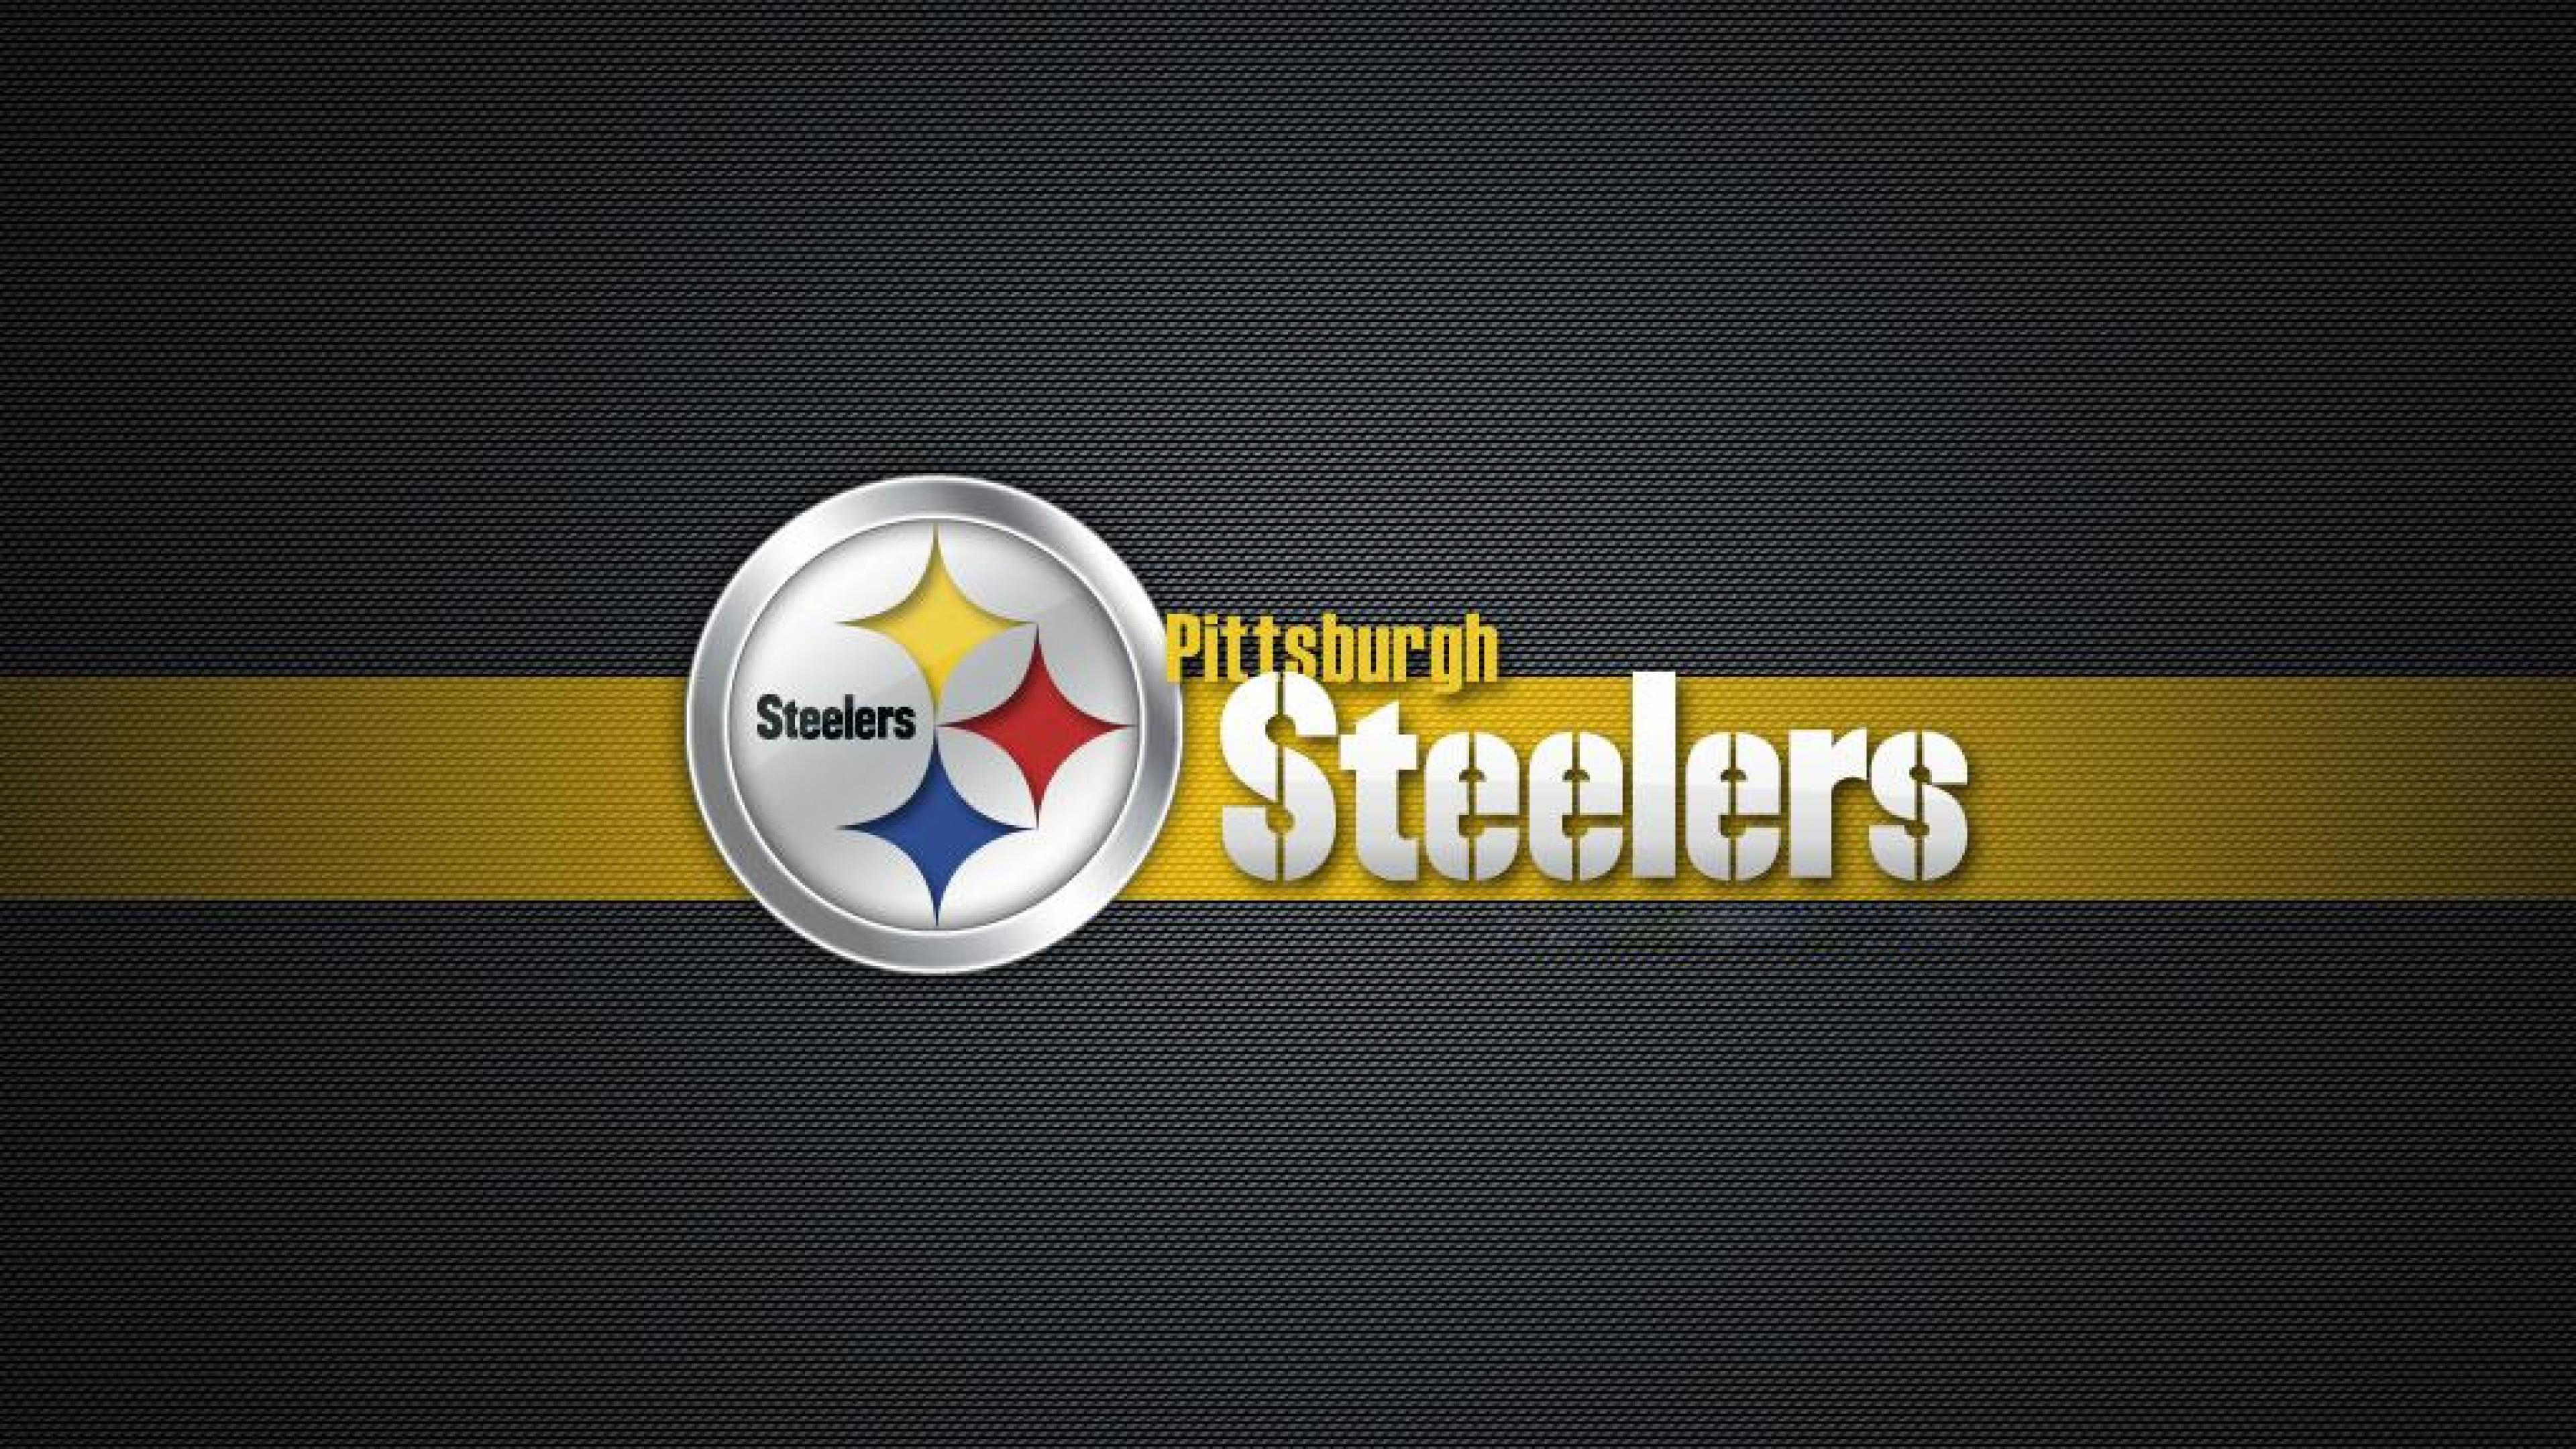 66 Steelers Screensavers and Wallpaper